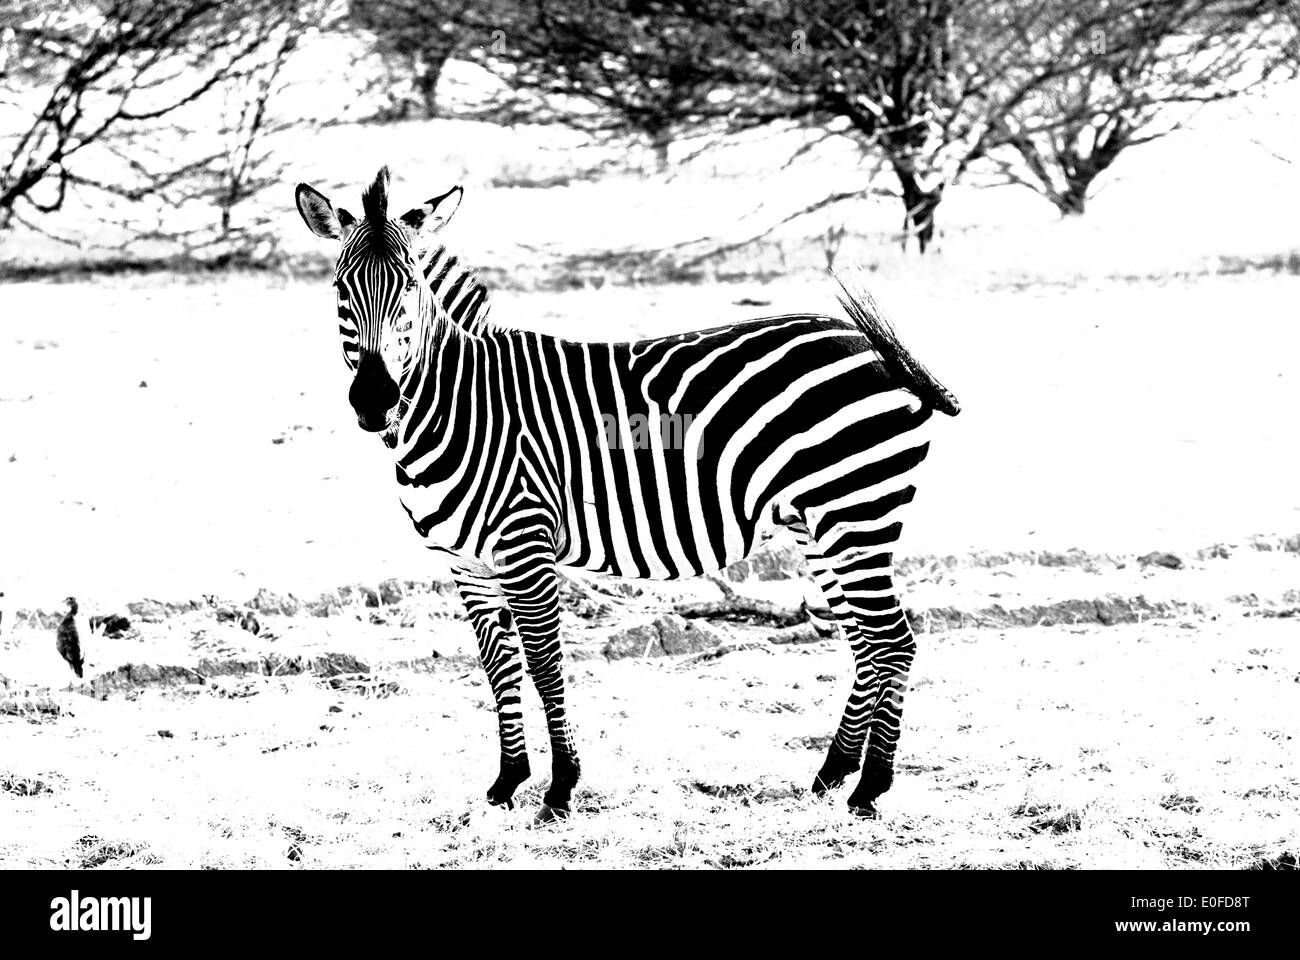 african free animals Stock Photo